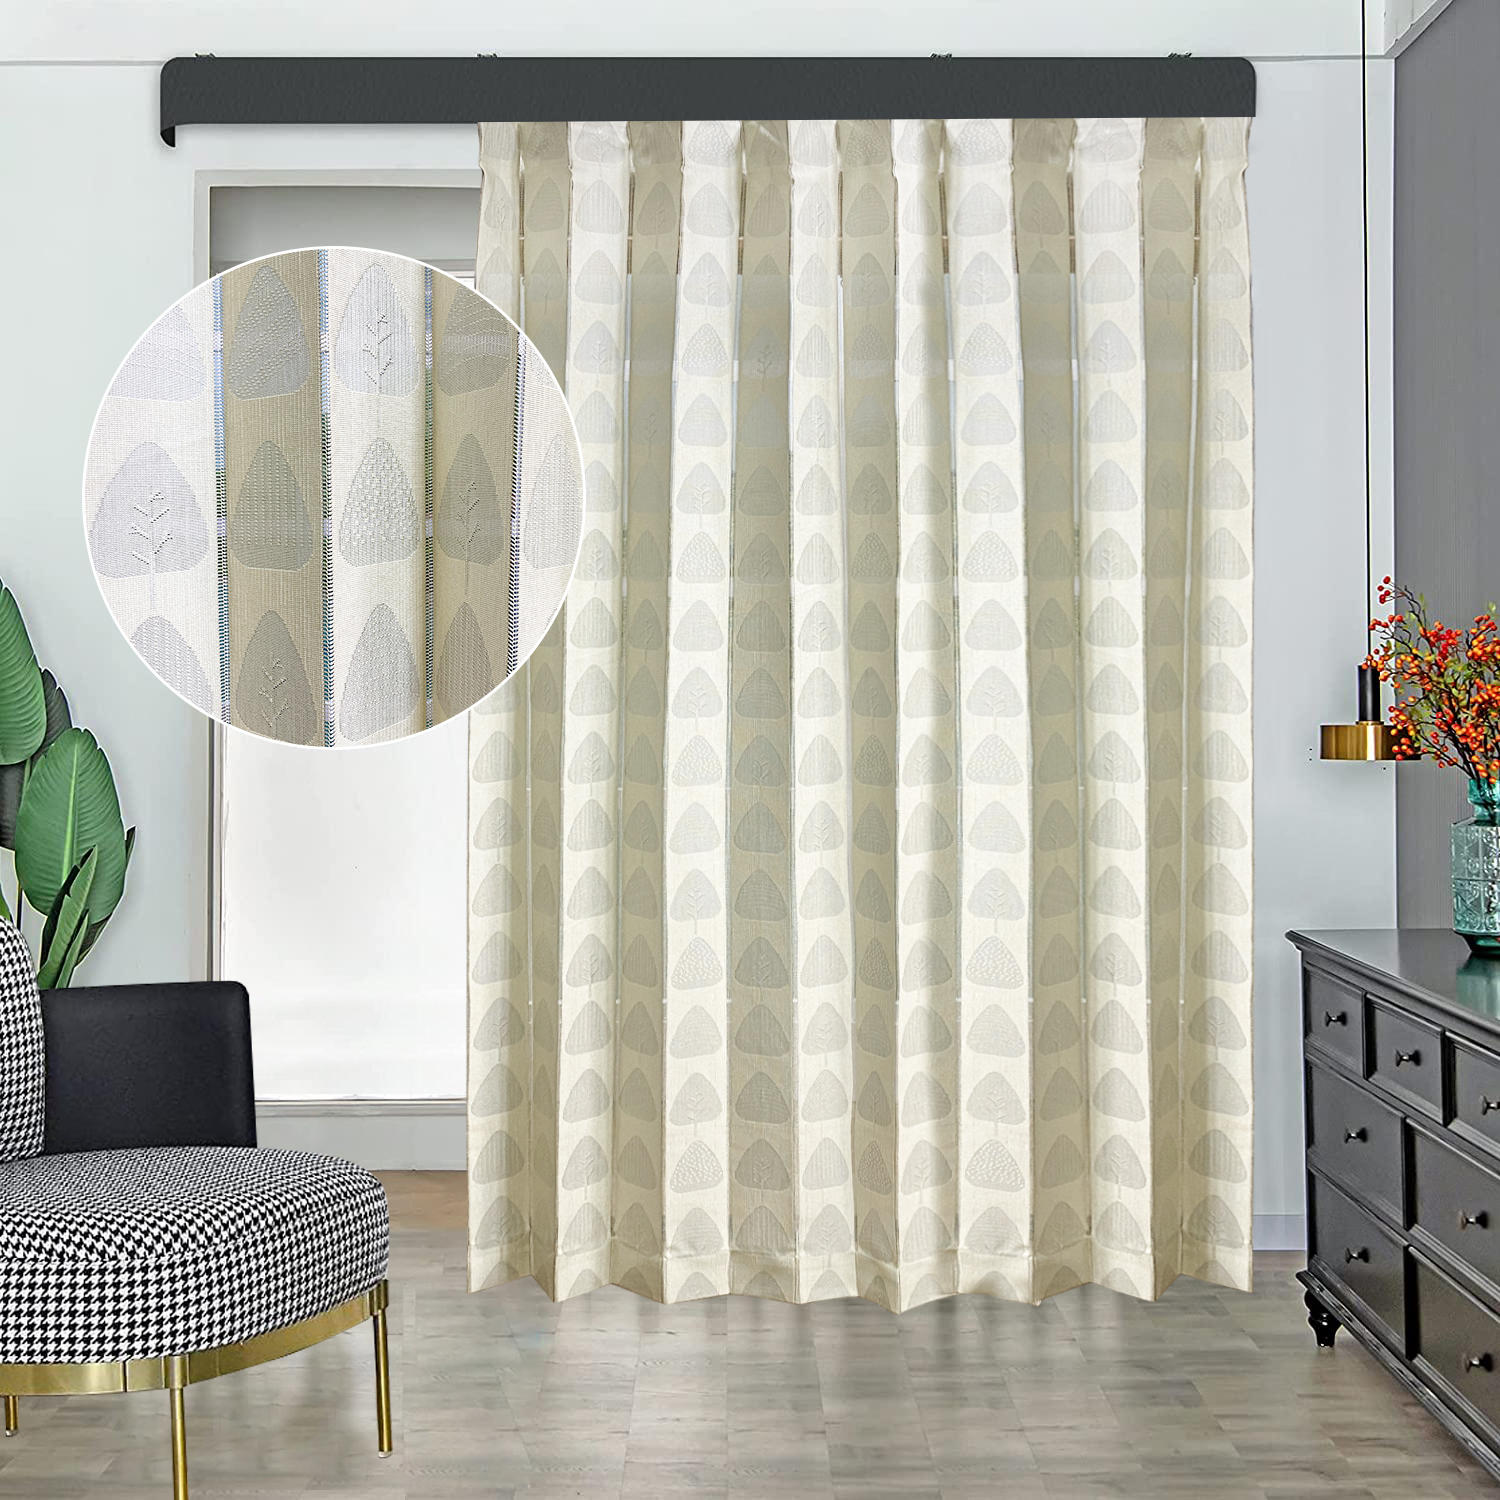 Living room blackout drape beige trees door divider jacquard venetian blinds window fabric